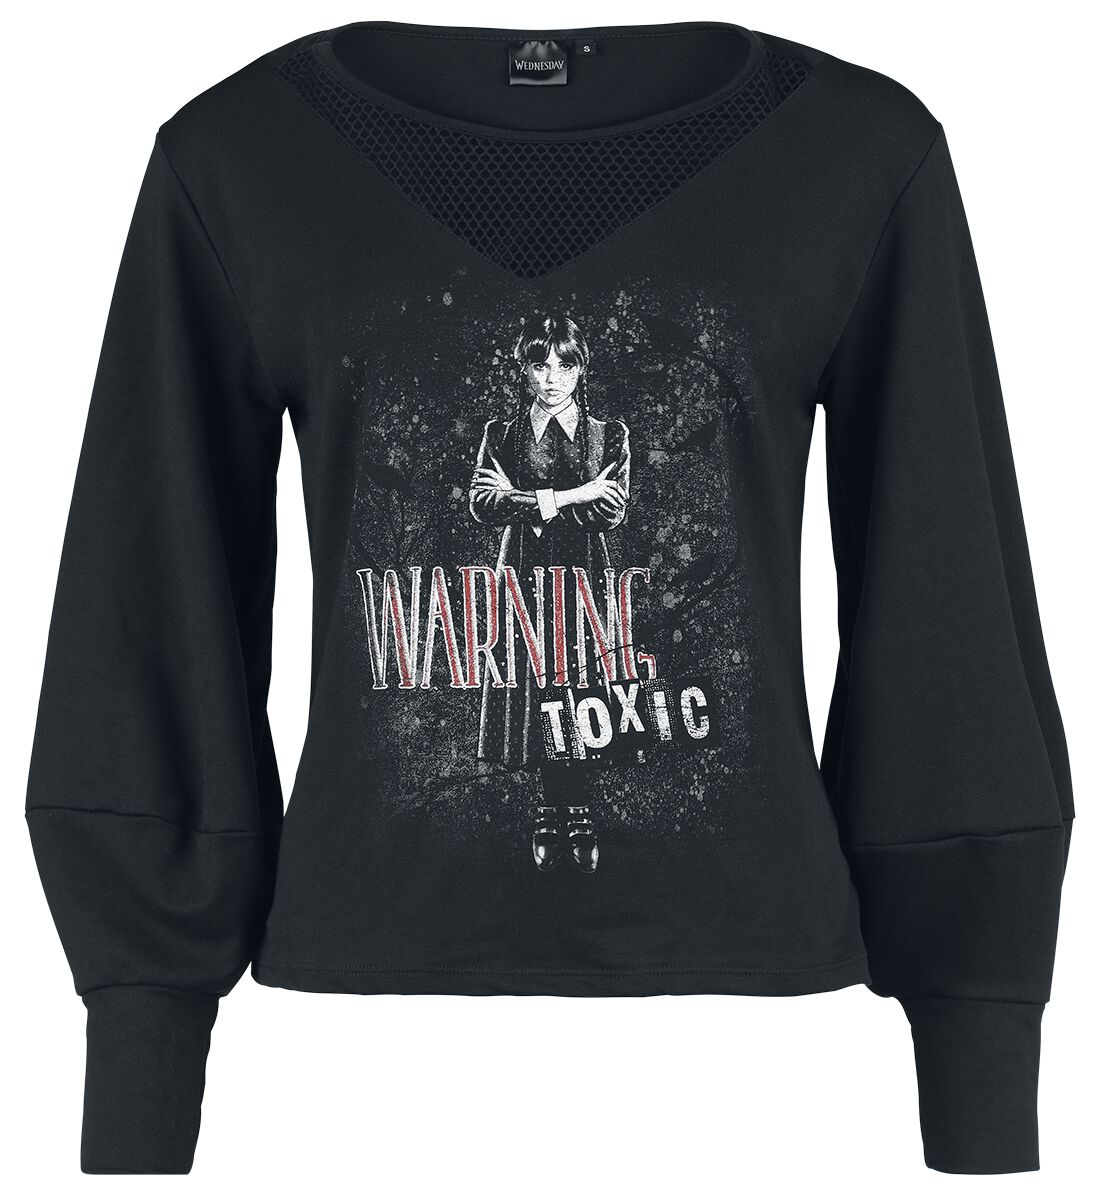 Wednesday Warning - Toxic Sweatshirt schwarz in XXL